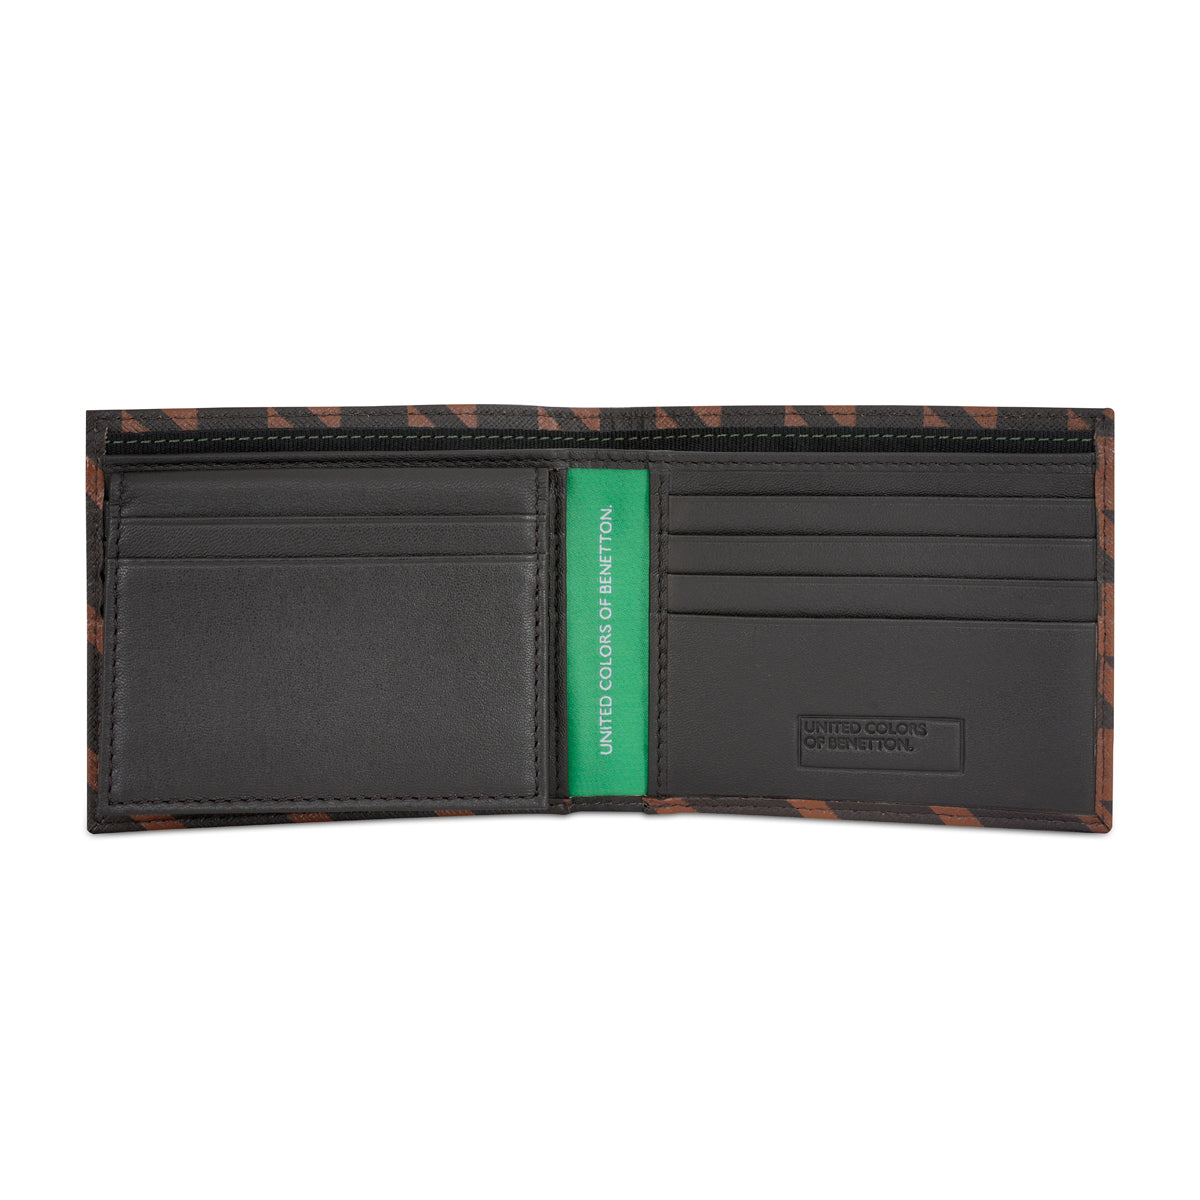 United Colors of Benetton Colier Passcase Wallet